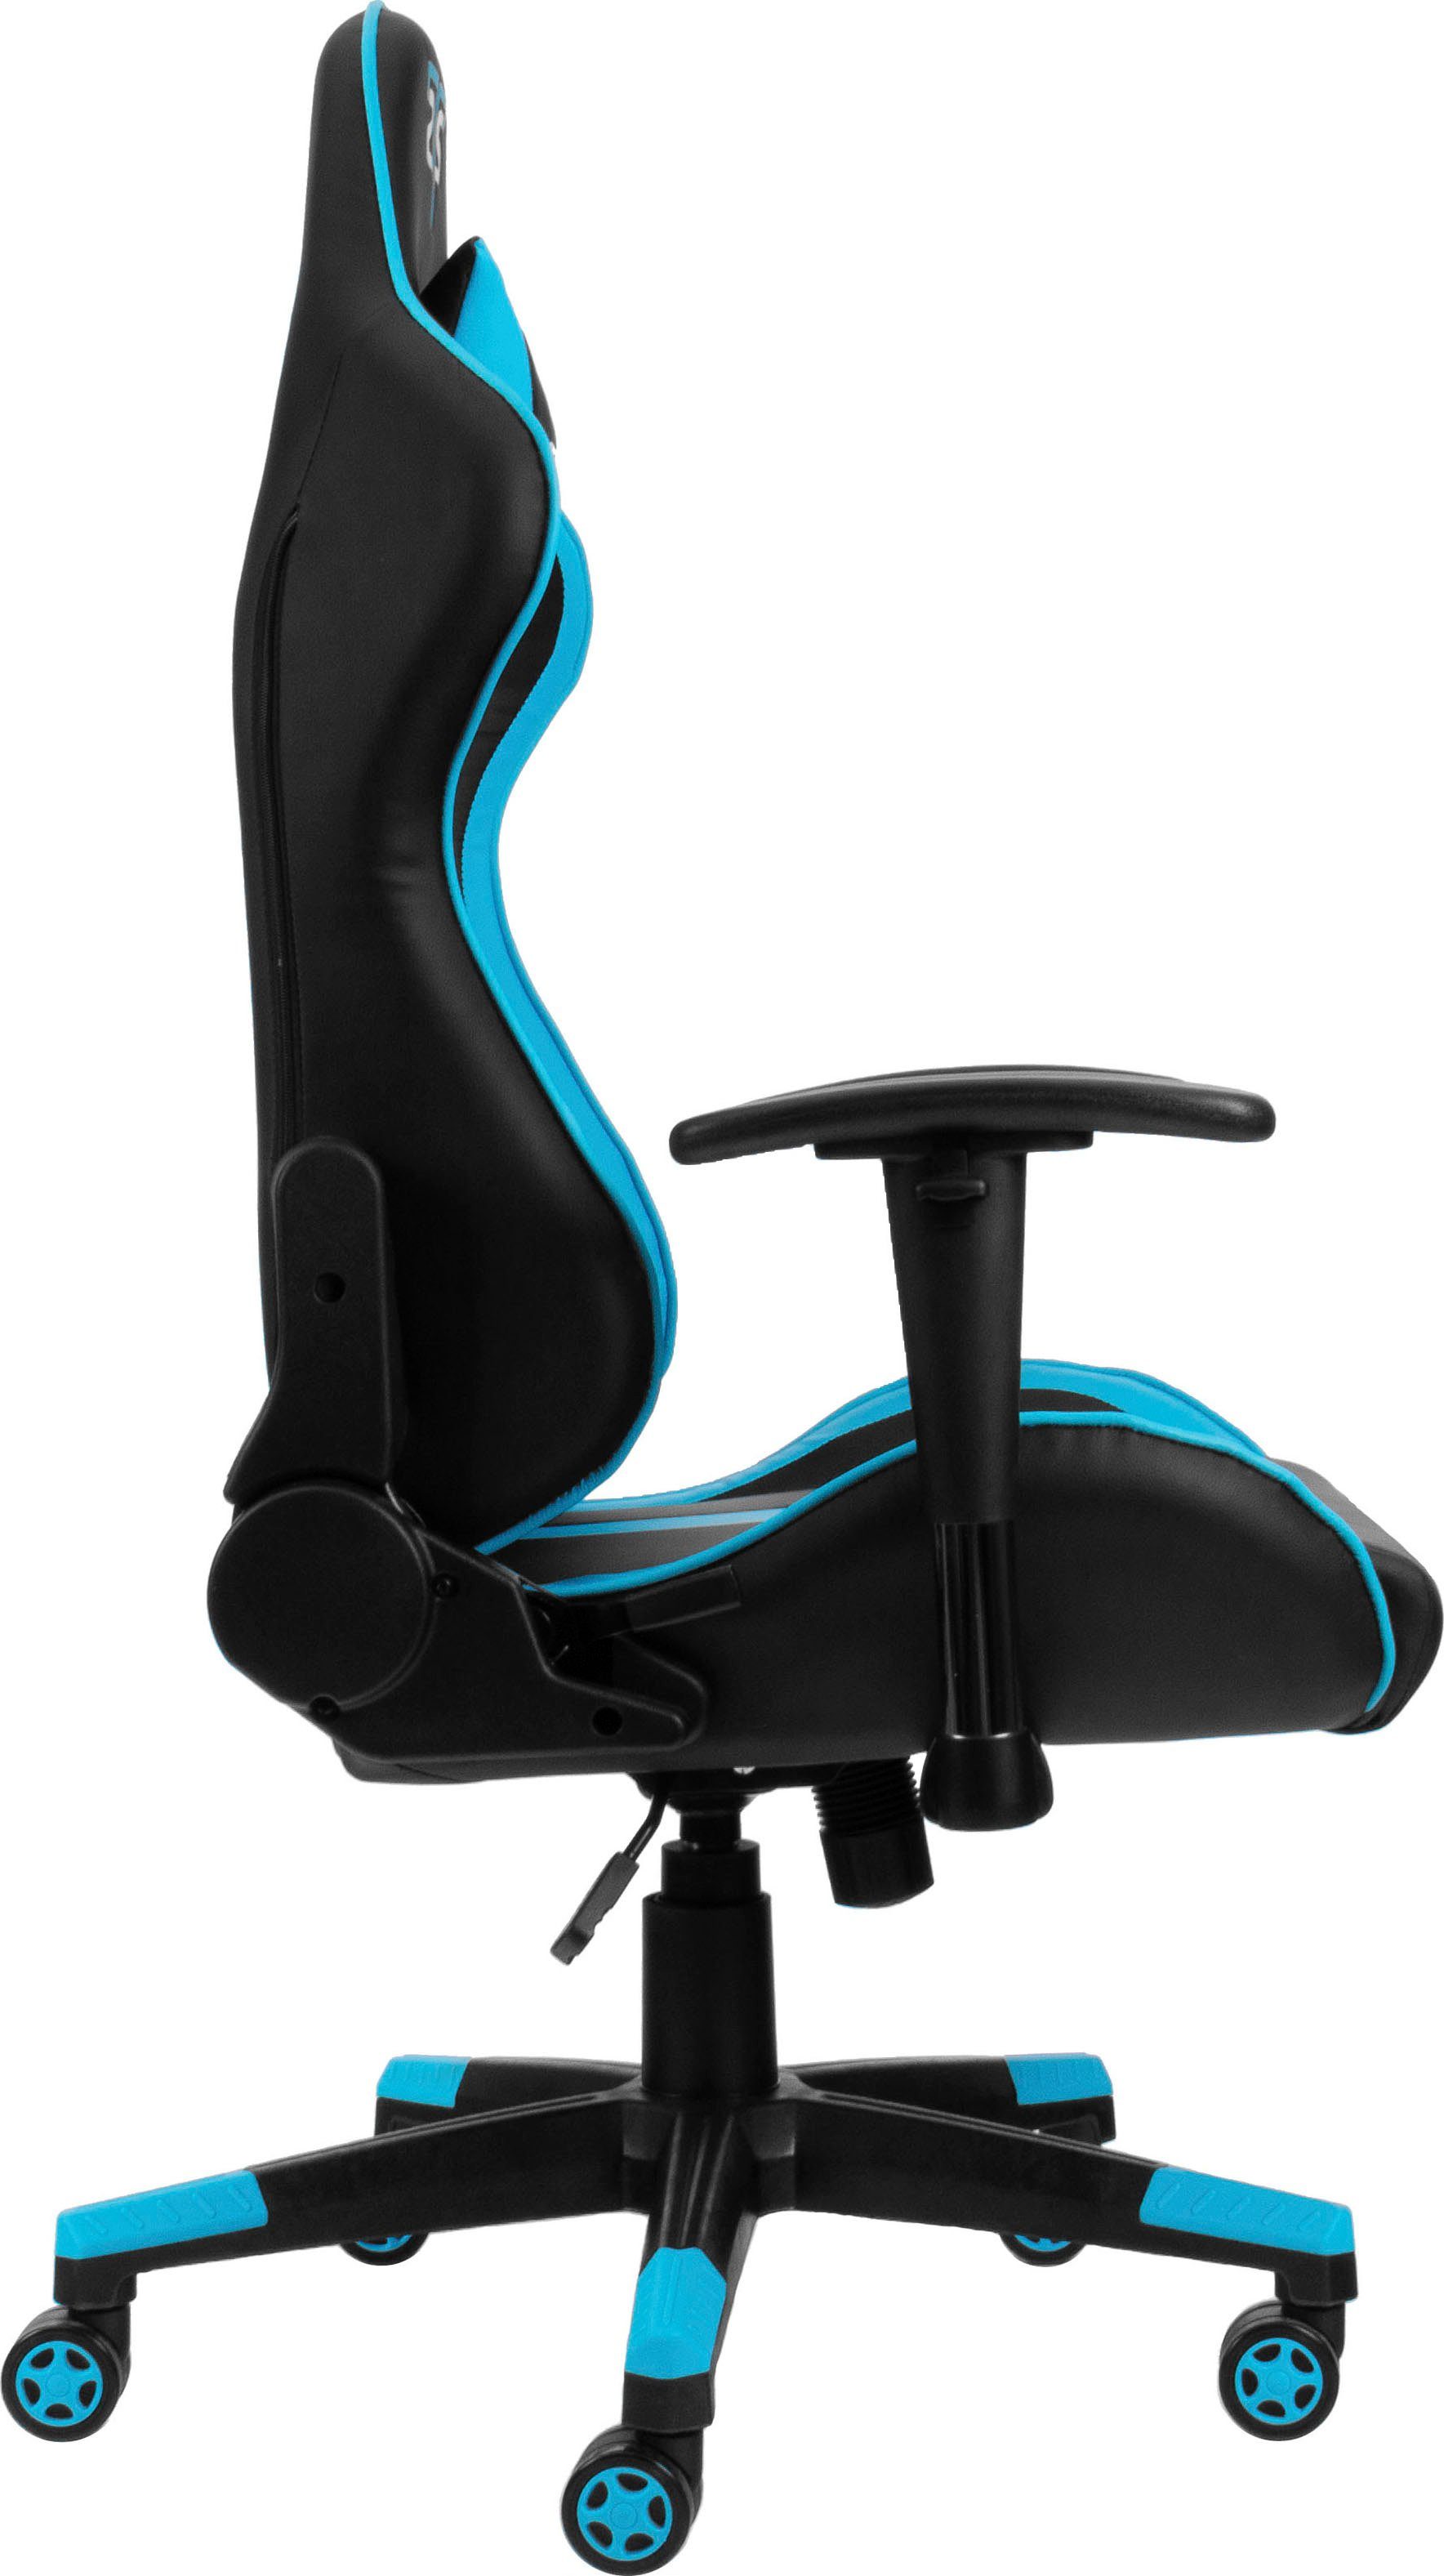 Hyrican Gaming-Stuhl Striker Stuhlunterlage 1100x1100x2mm Bodenschutzmatte Gamingstuhl blau "Copilot" + (Set), Gaming-Stuhl